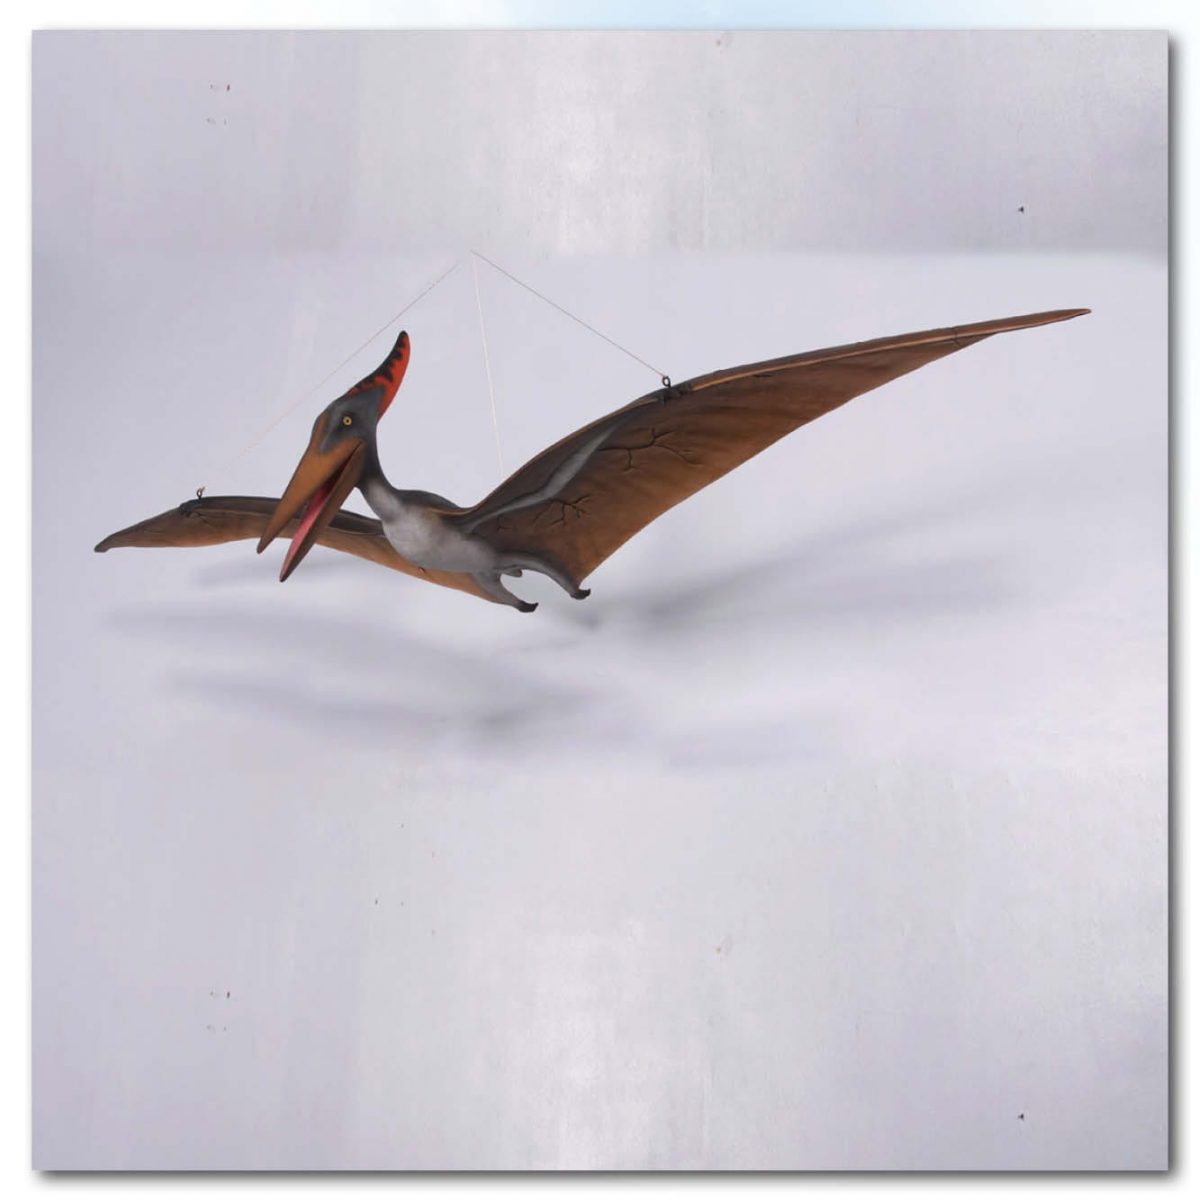 Pteranodon Dinosaur Definitive Sculptures In Australia